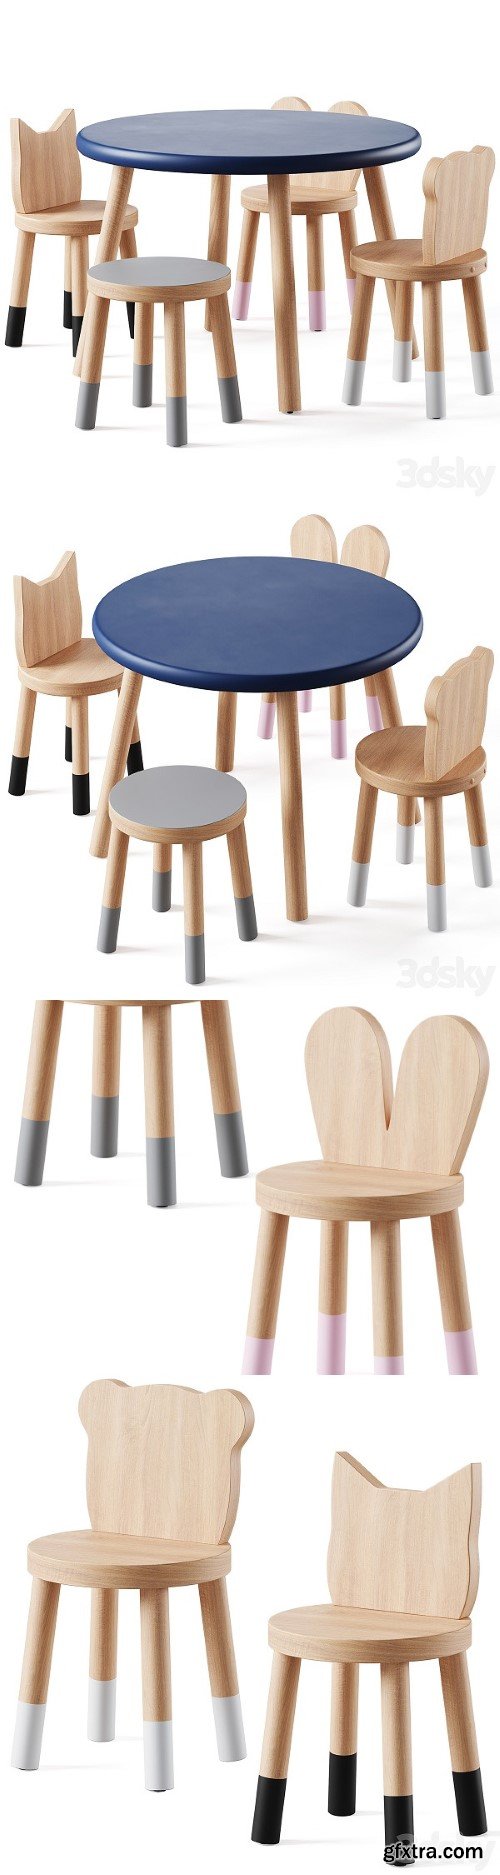 Nico & Yeye Round Kids Table and Chairs by Pottery Barn | Vray+Corona